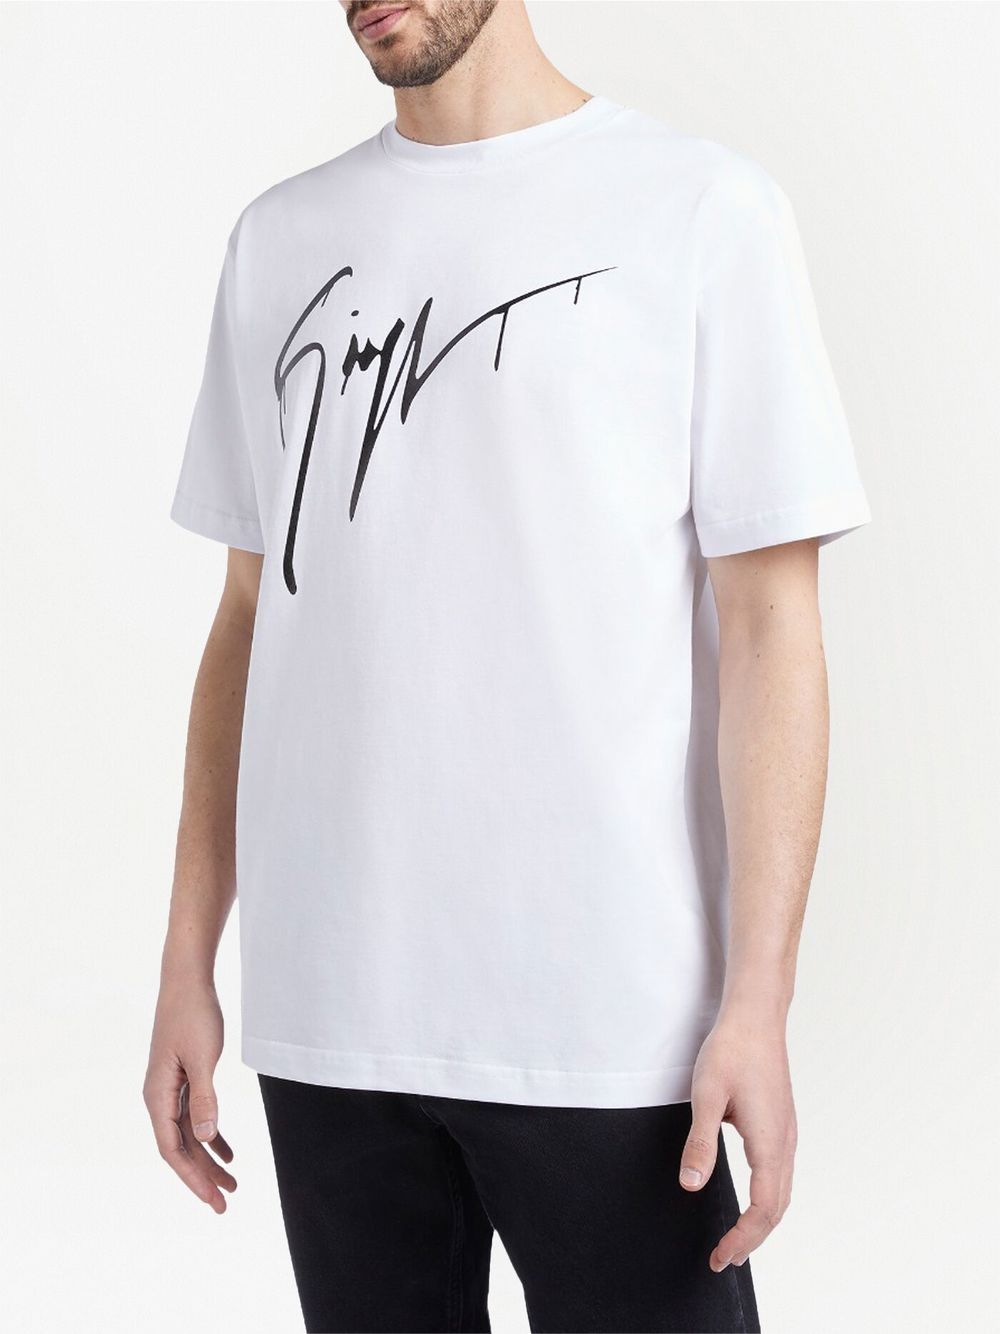 Giuseppe Zanotti T-shirt met logo van verfspray - Wit